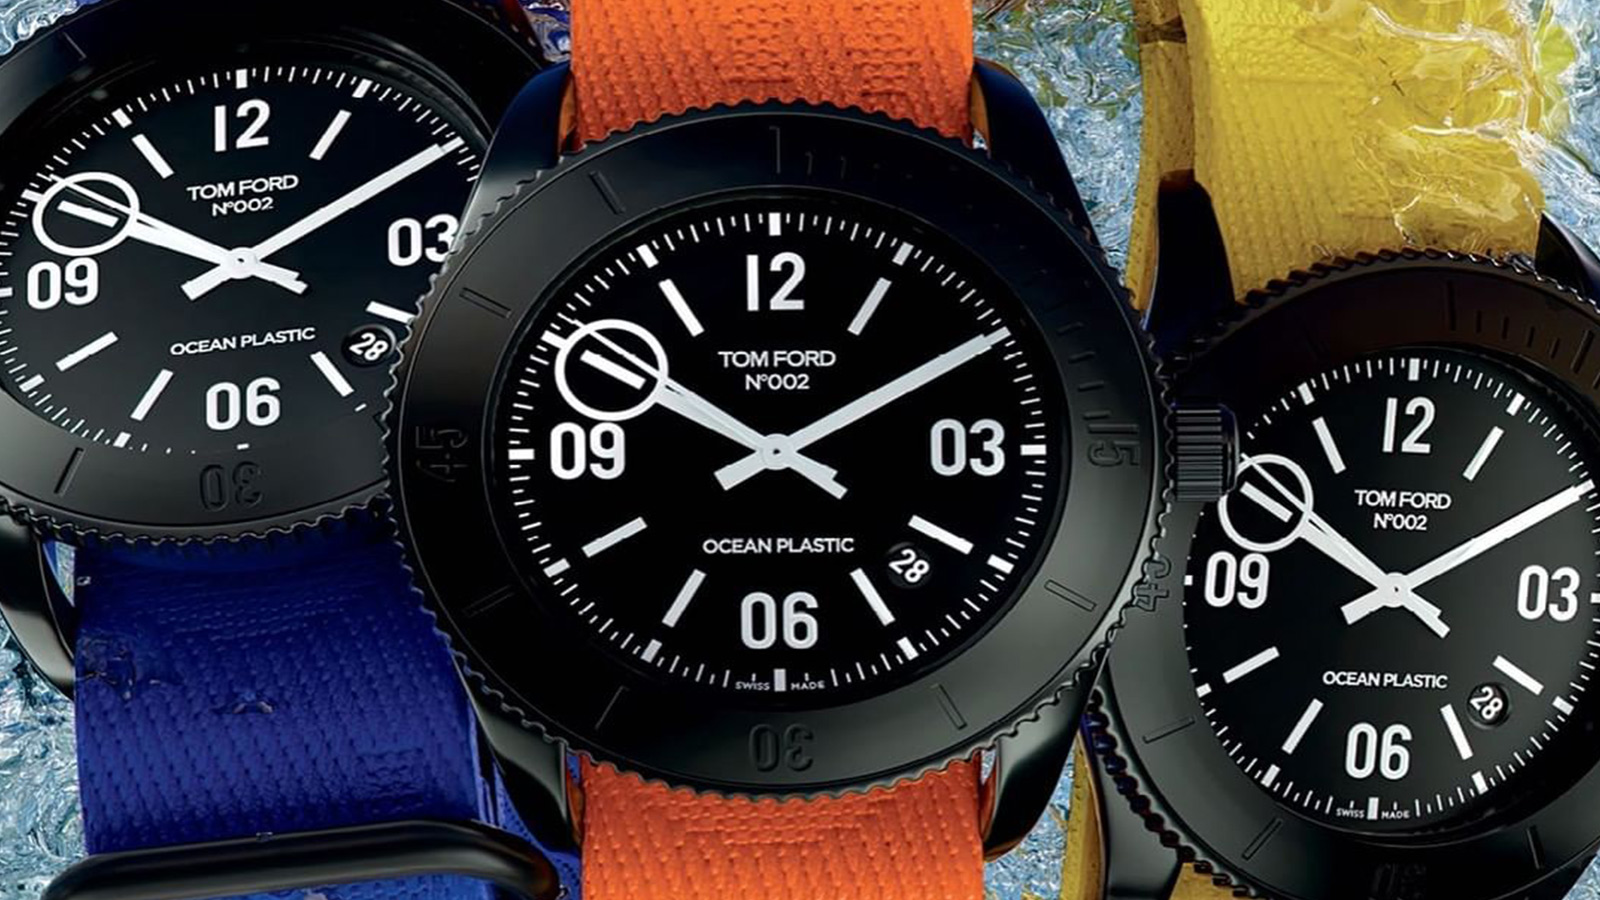 Tom Ford 002 Ocean Plastic Sport Watch